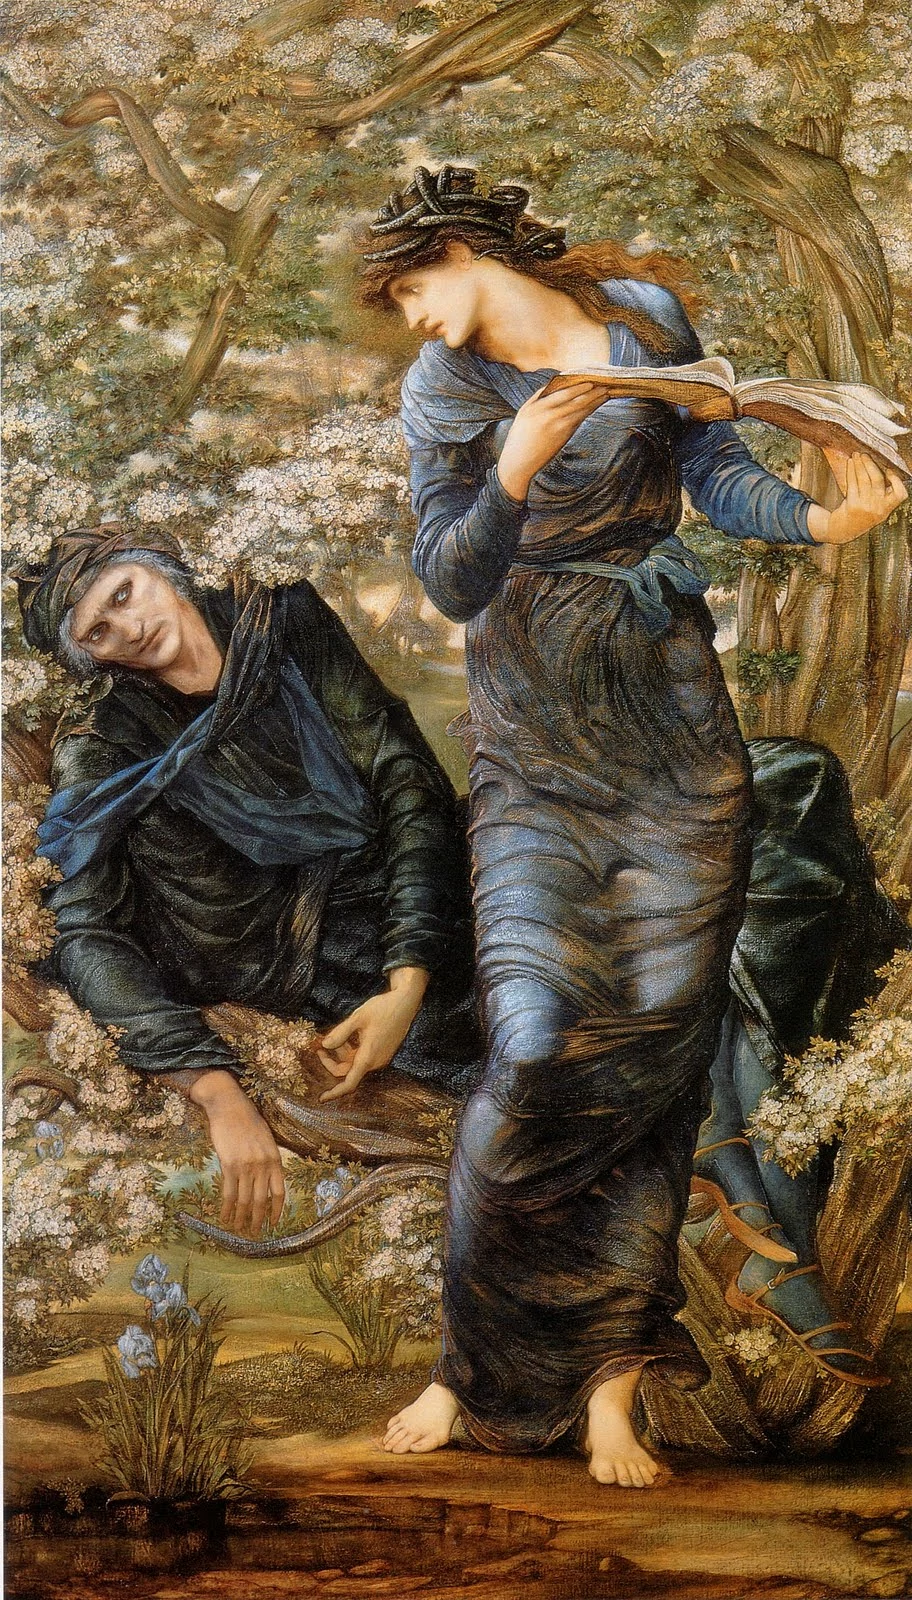 The Beguiling of Merlin, Edward Burne-Jones